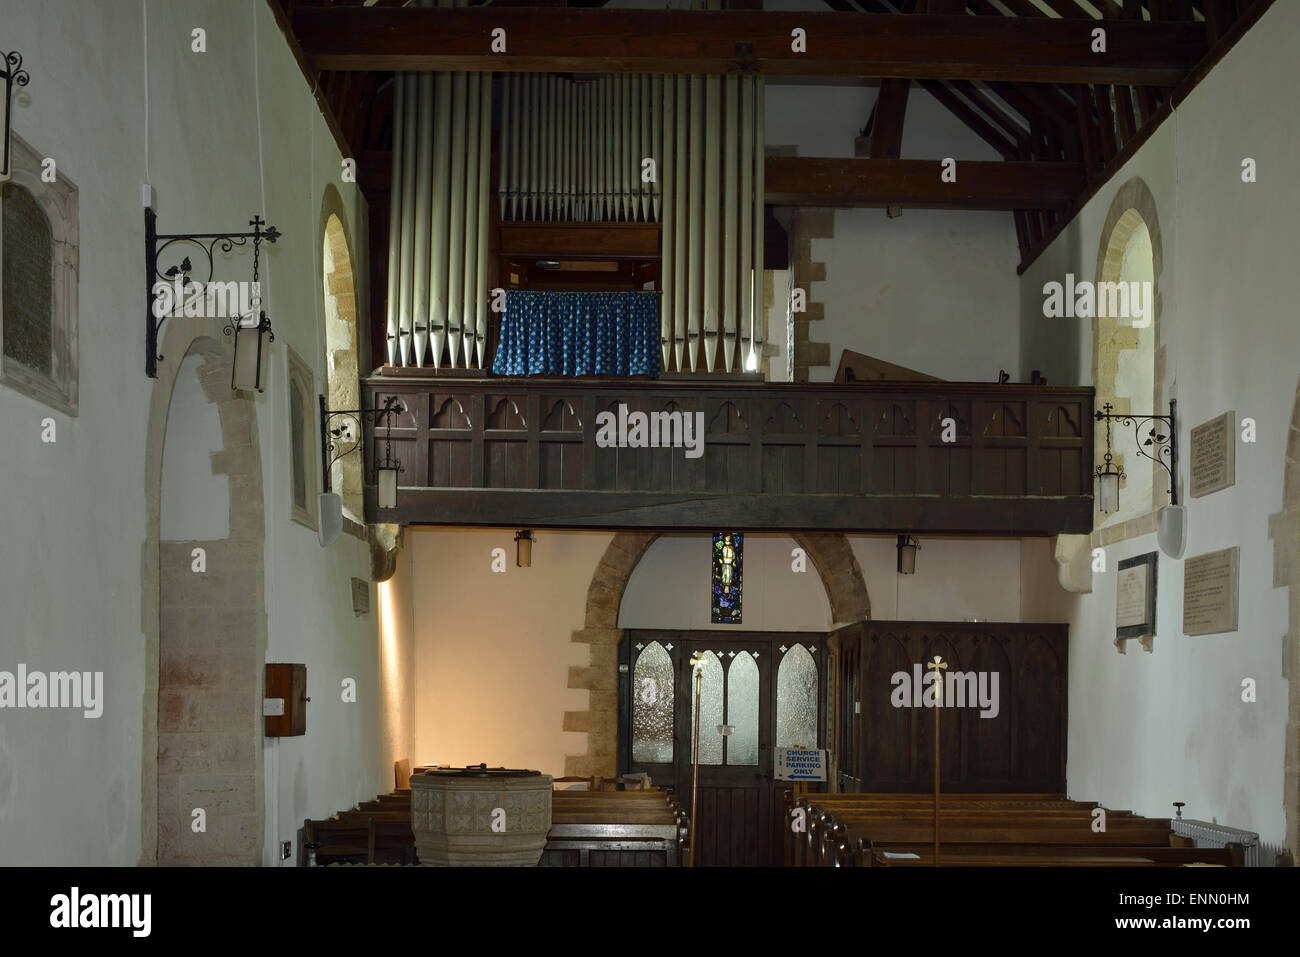 Orgel auf Balkon St. Nikolaus Pfarrkirche, Wert Matravers, Dorset Stockfoto